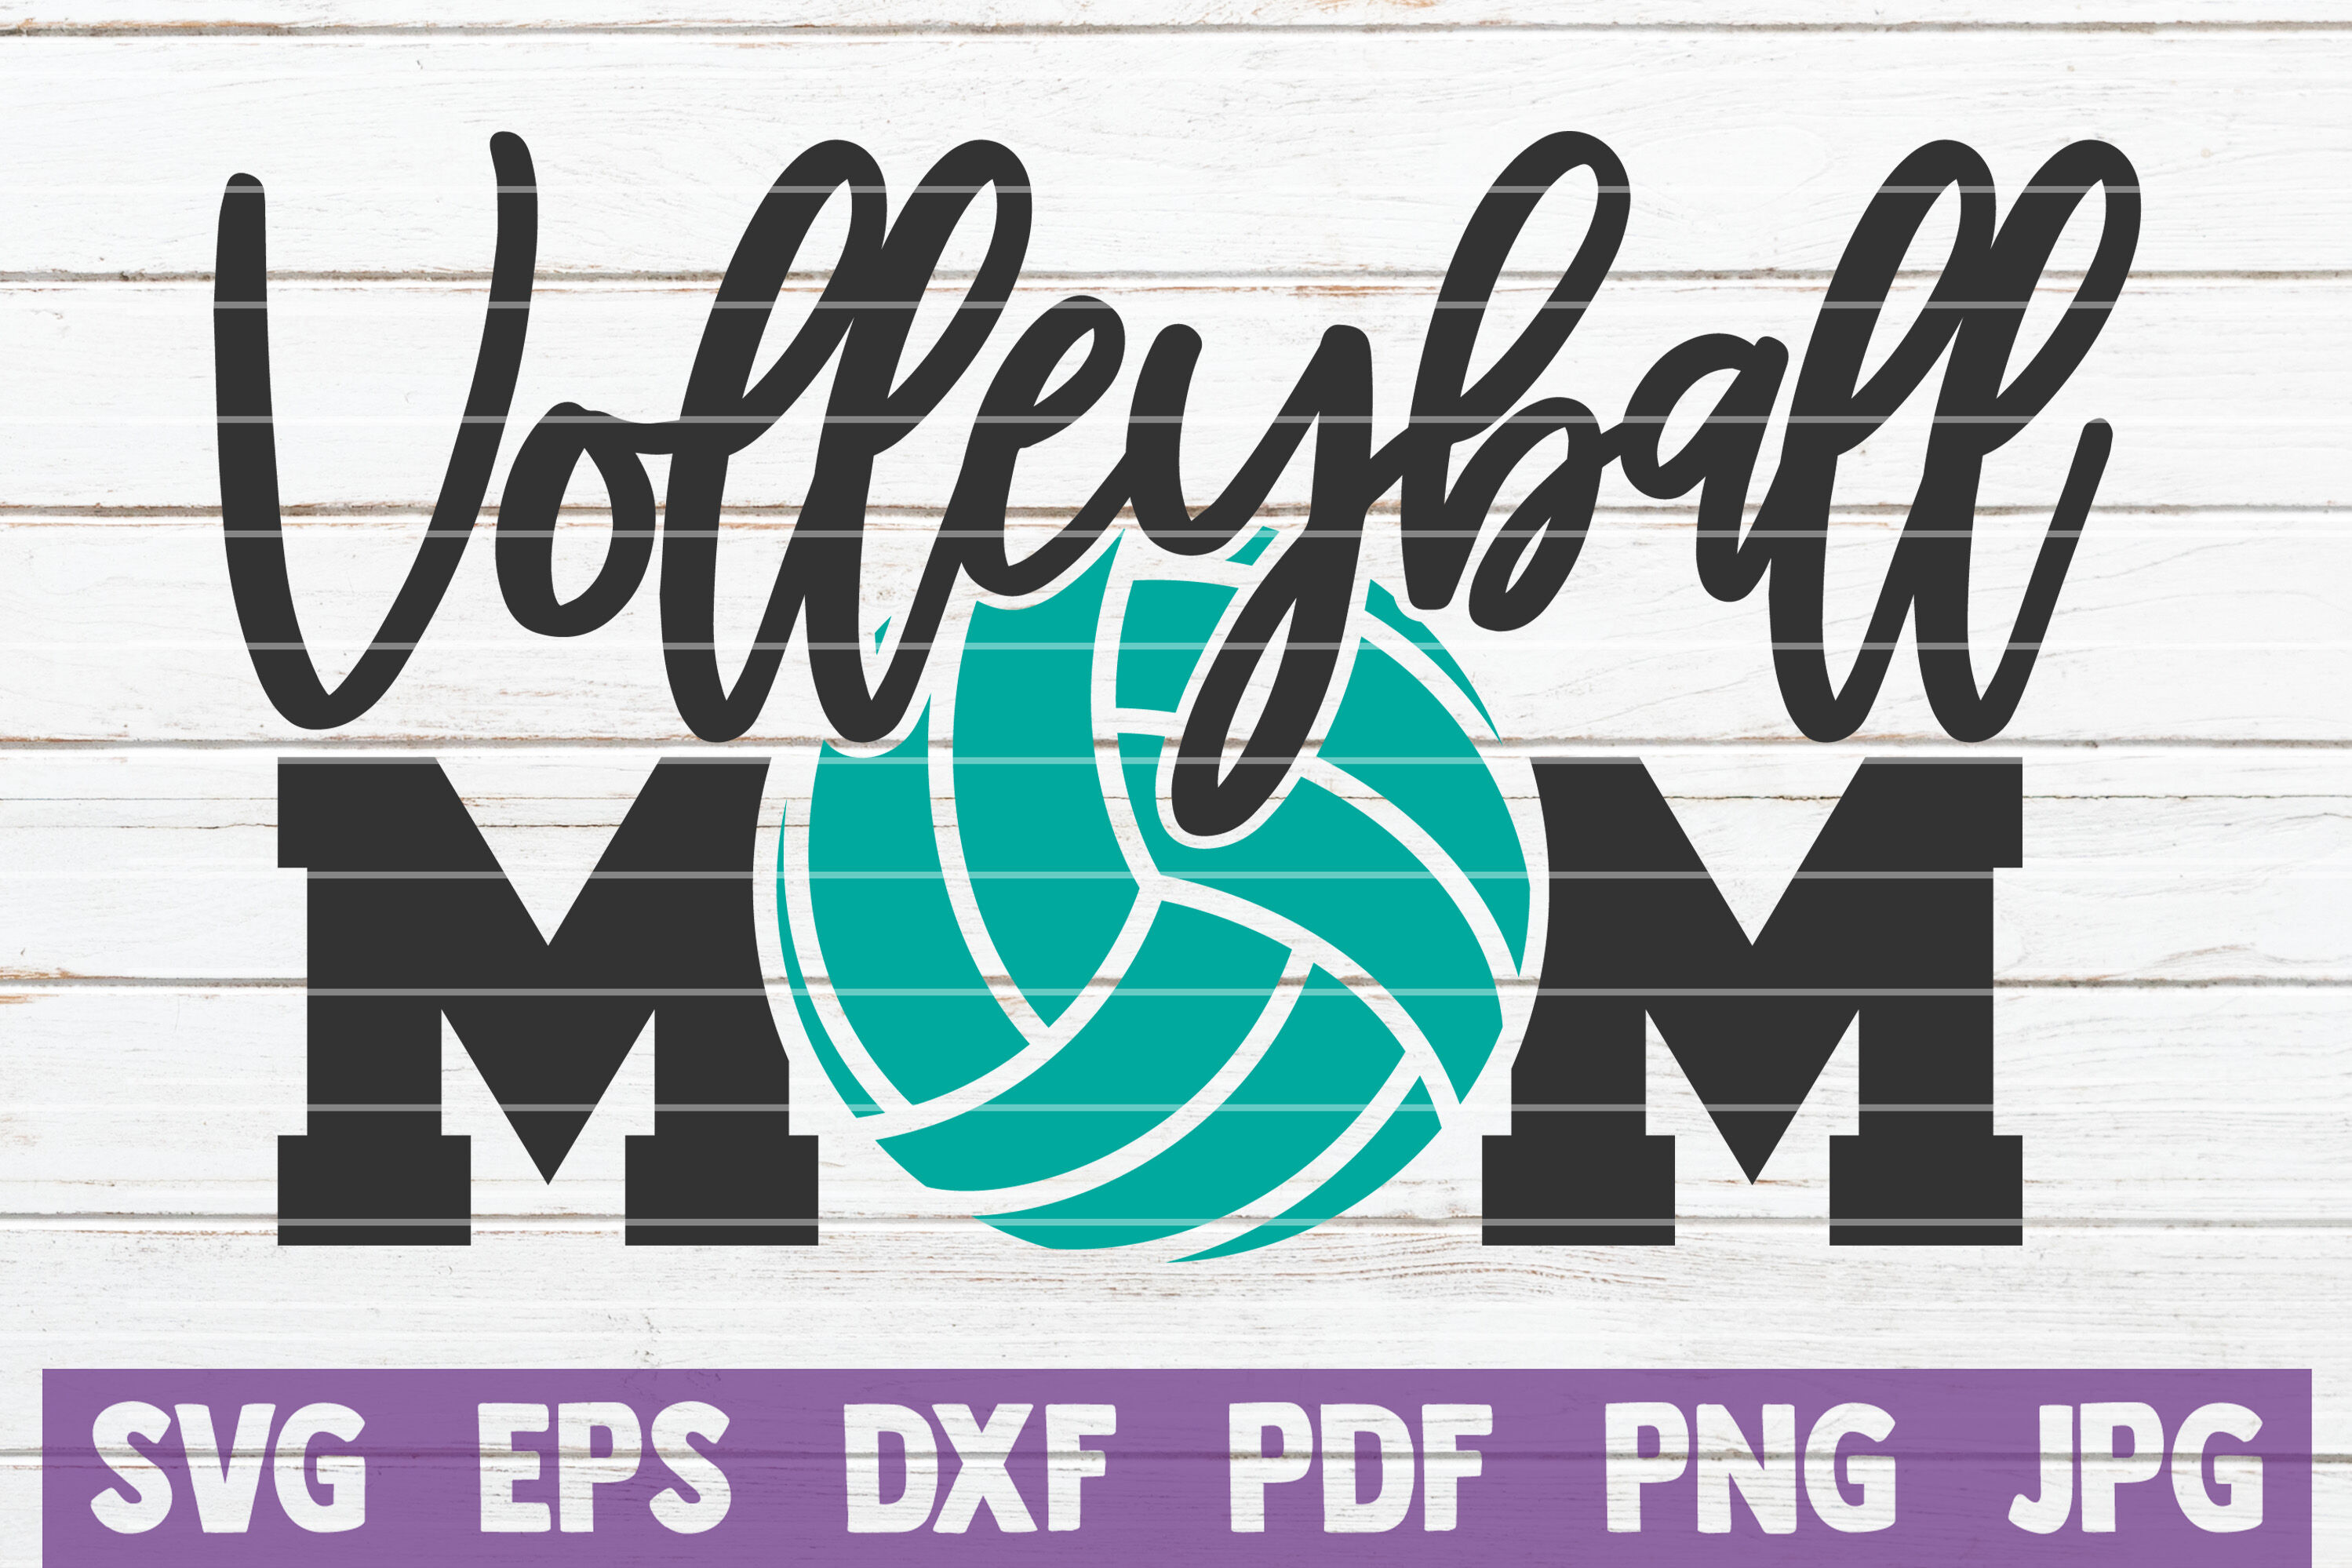 Download Volleyball Mom Svg Art Collectibles Prints Kientructhanhdat Com